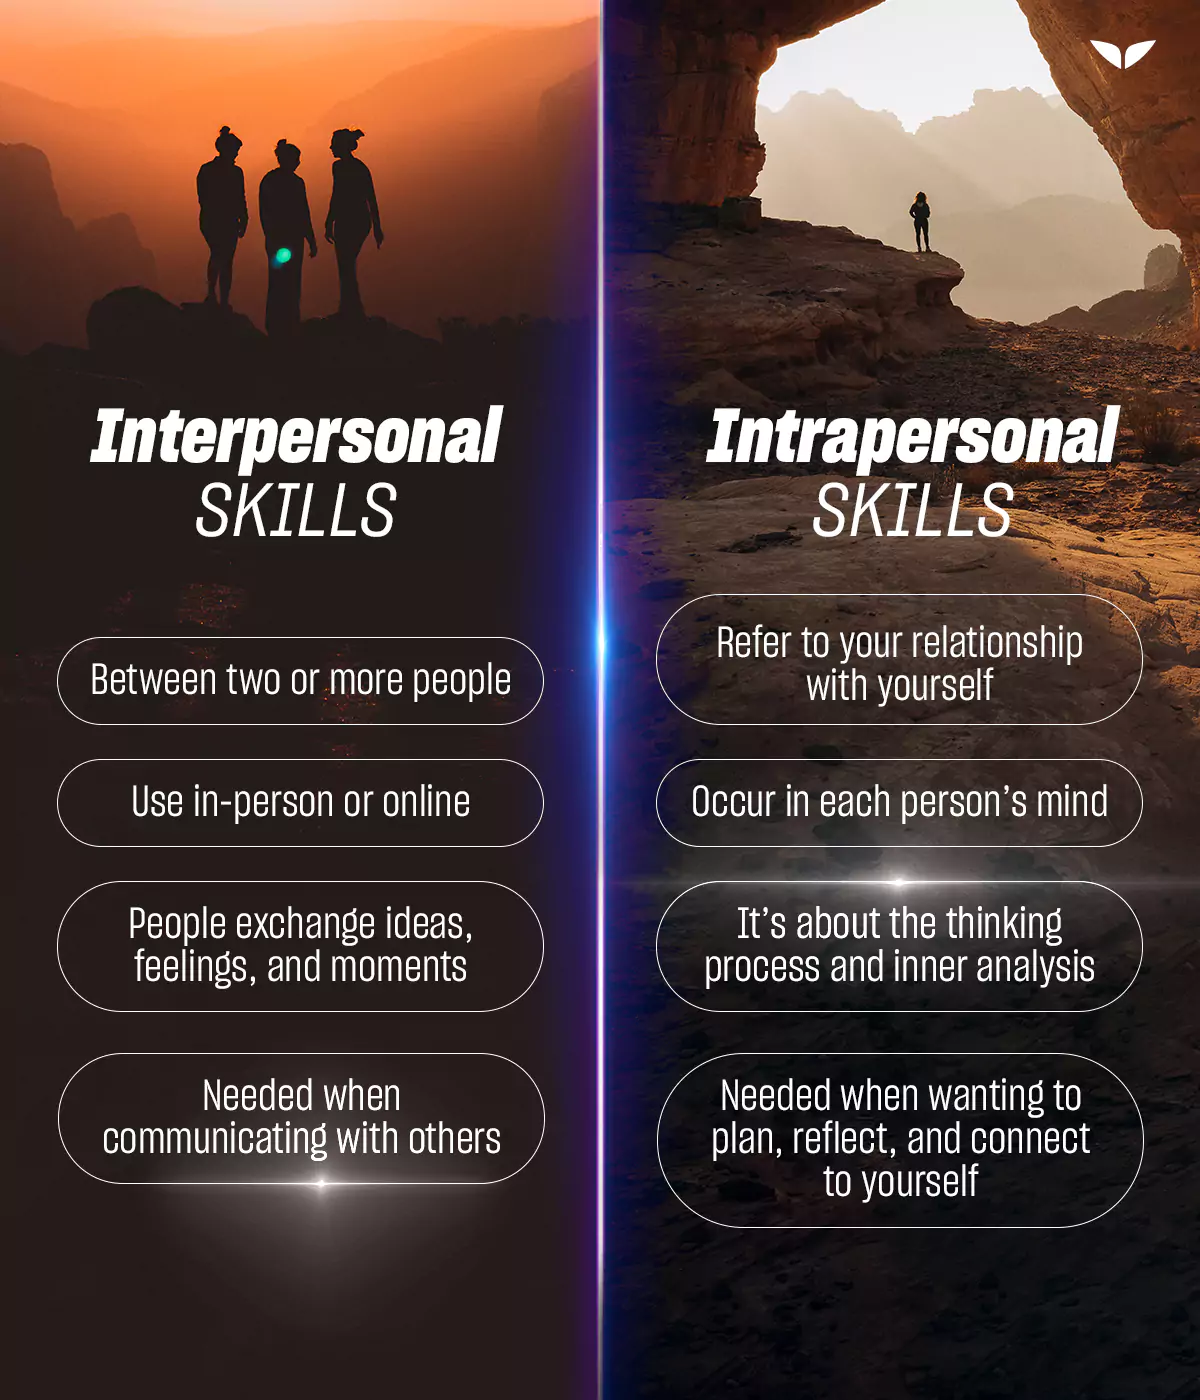 Graphic of interpersonal vs. intrapersonal skills